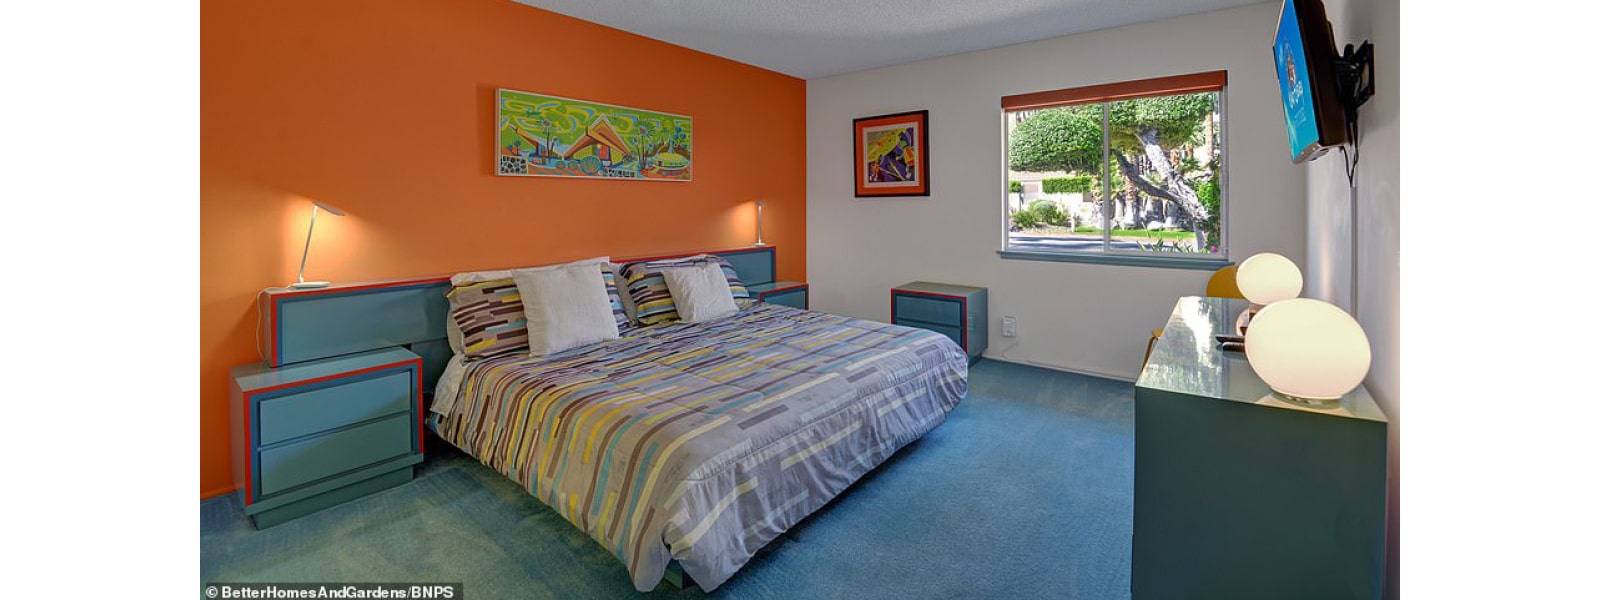 orange and blue bedroom roomset